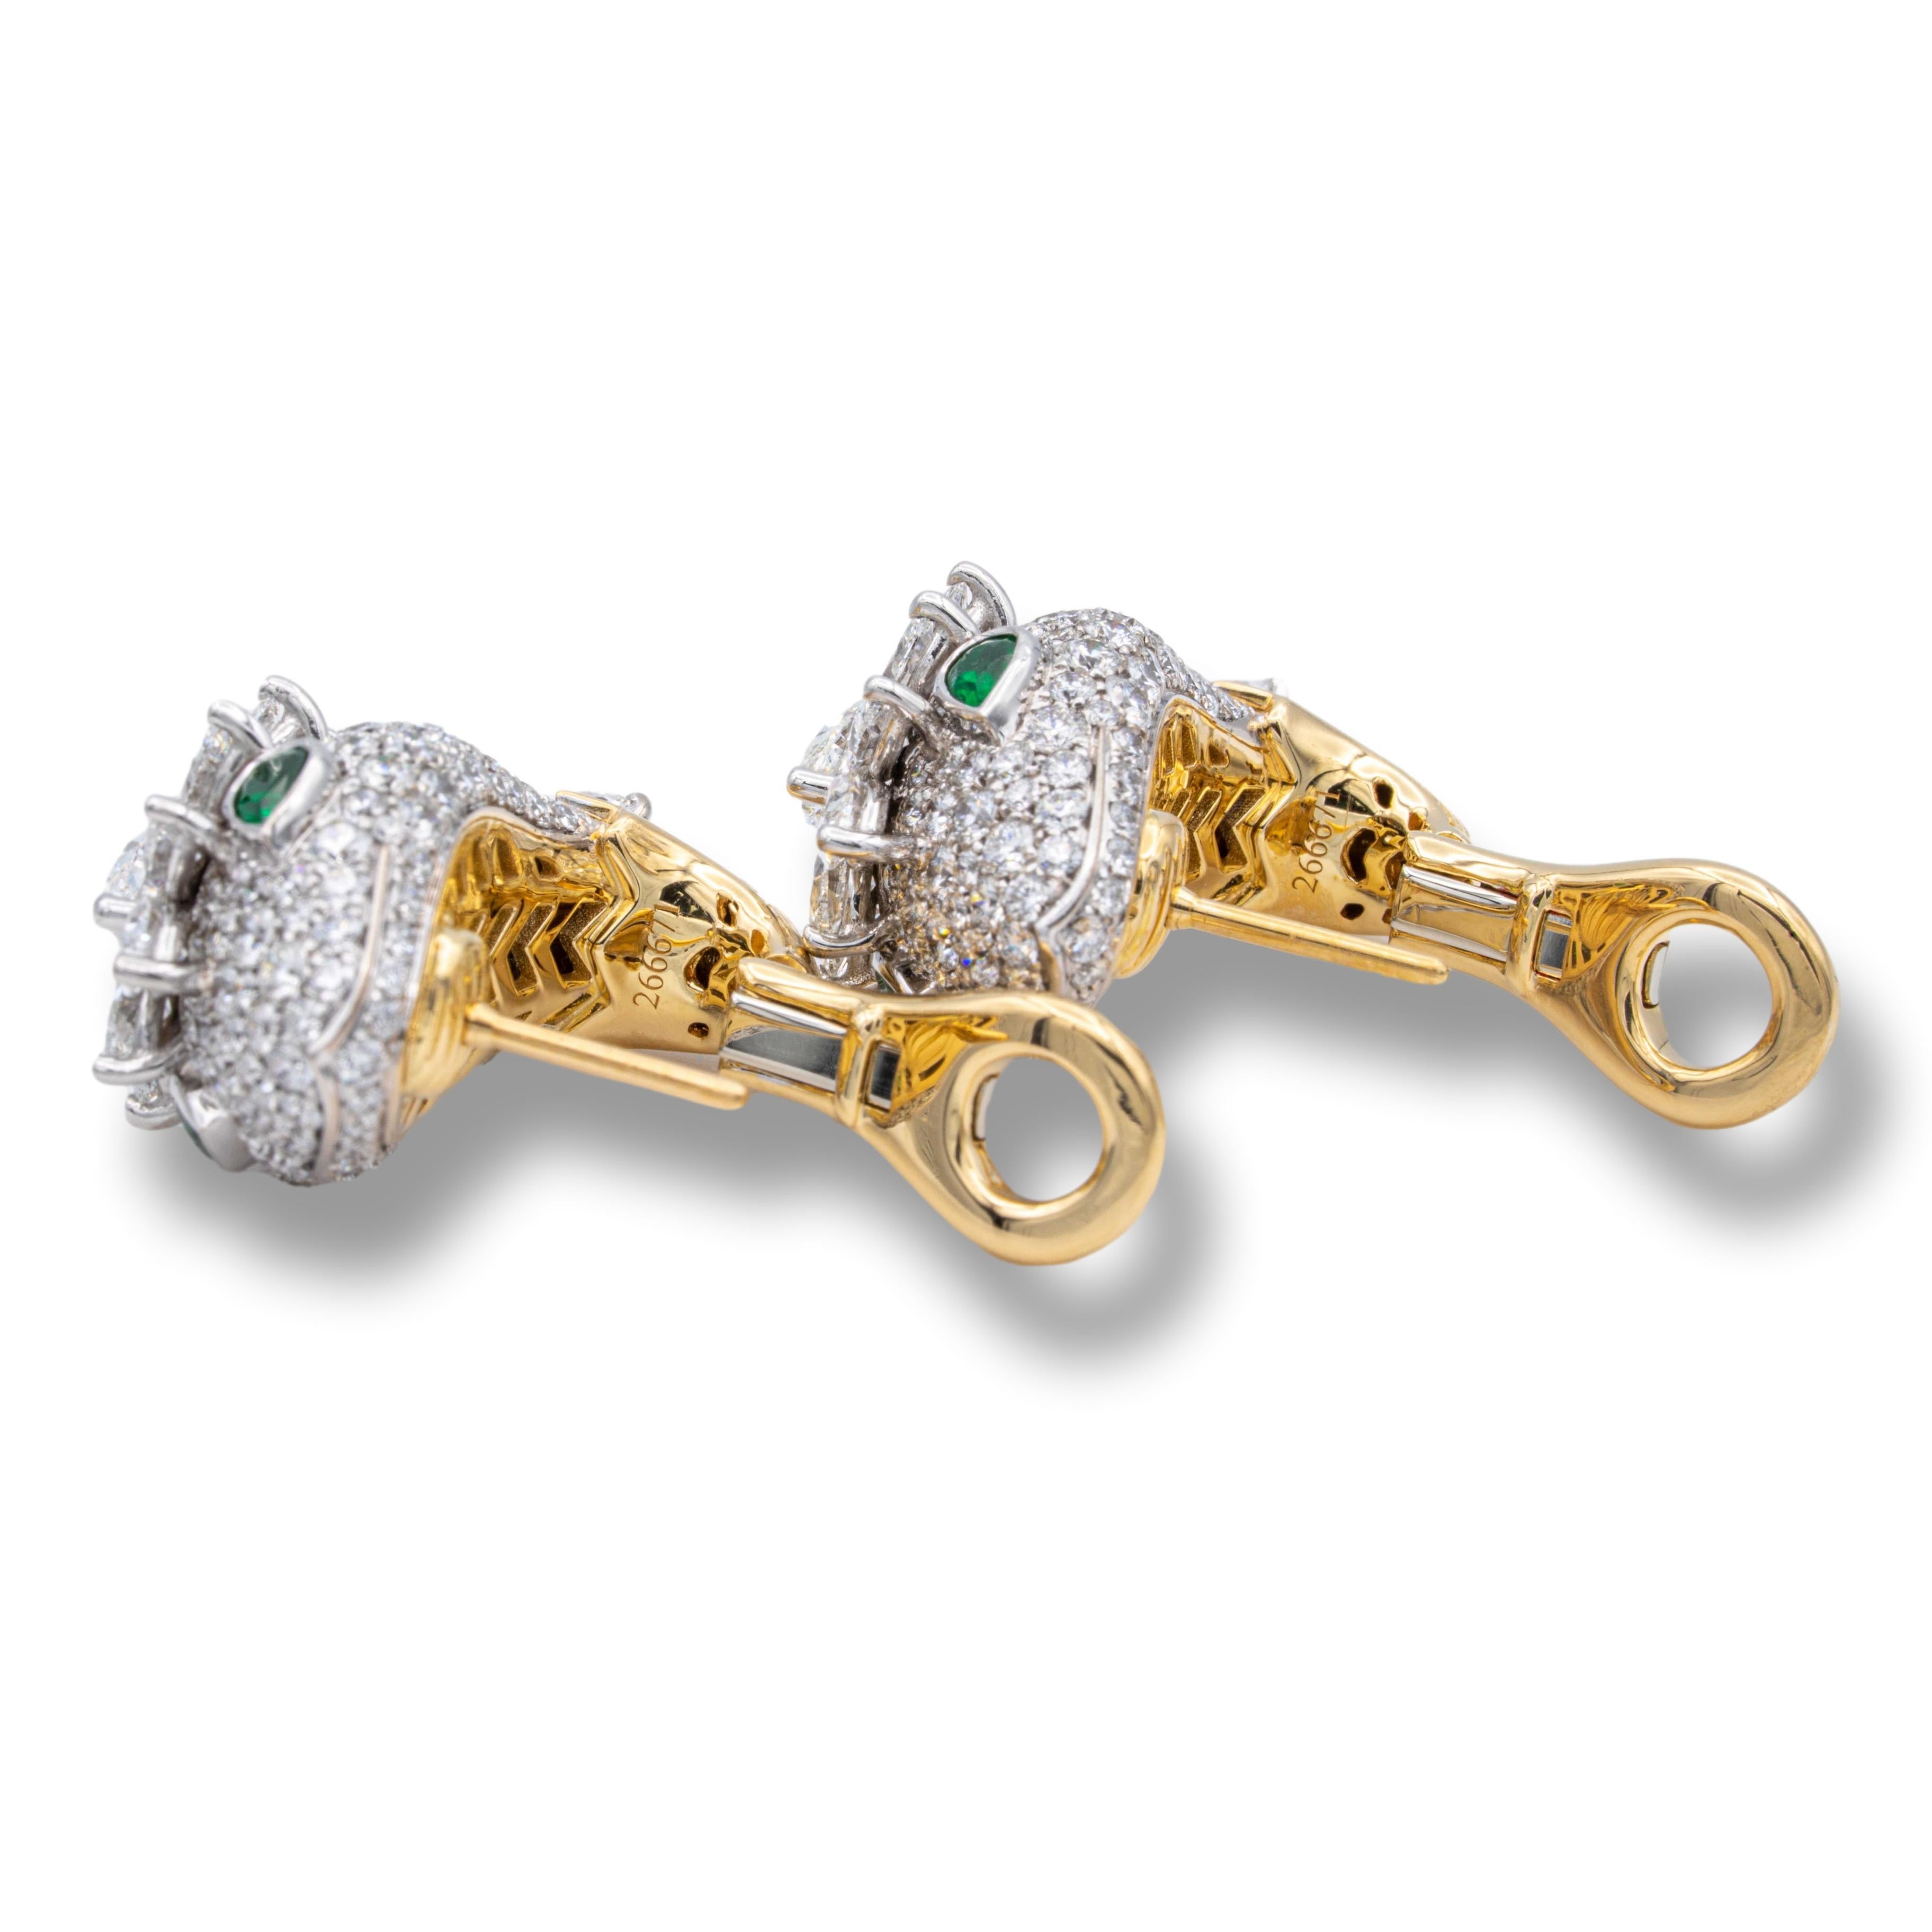 Modernist Bvlgari Serpenti Platinum and 18K Yellow Gold Diamond Earrings with Emerald Eyes